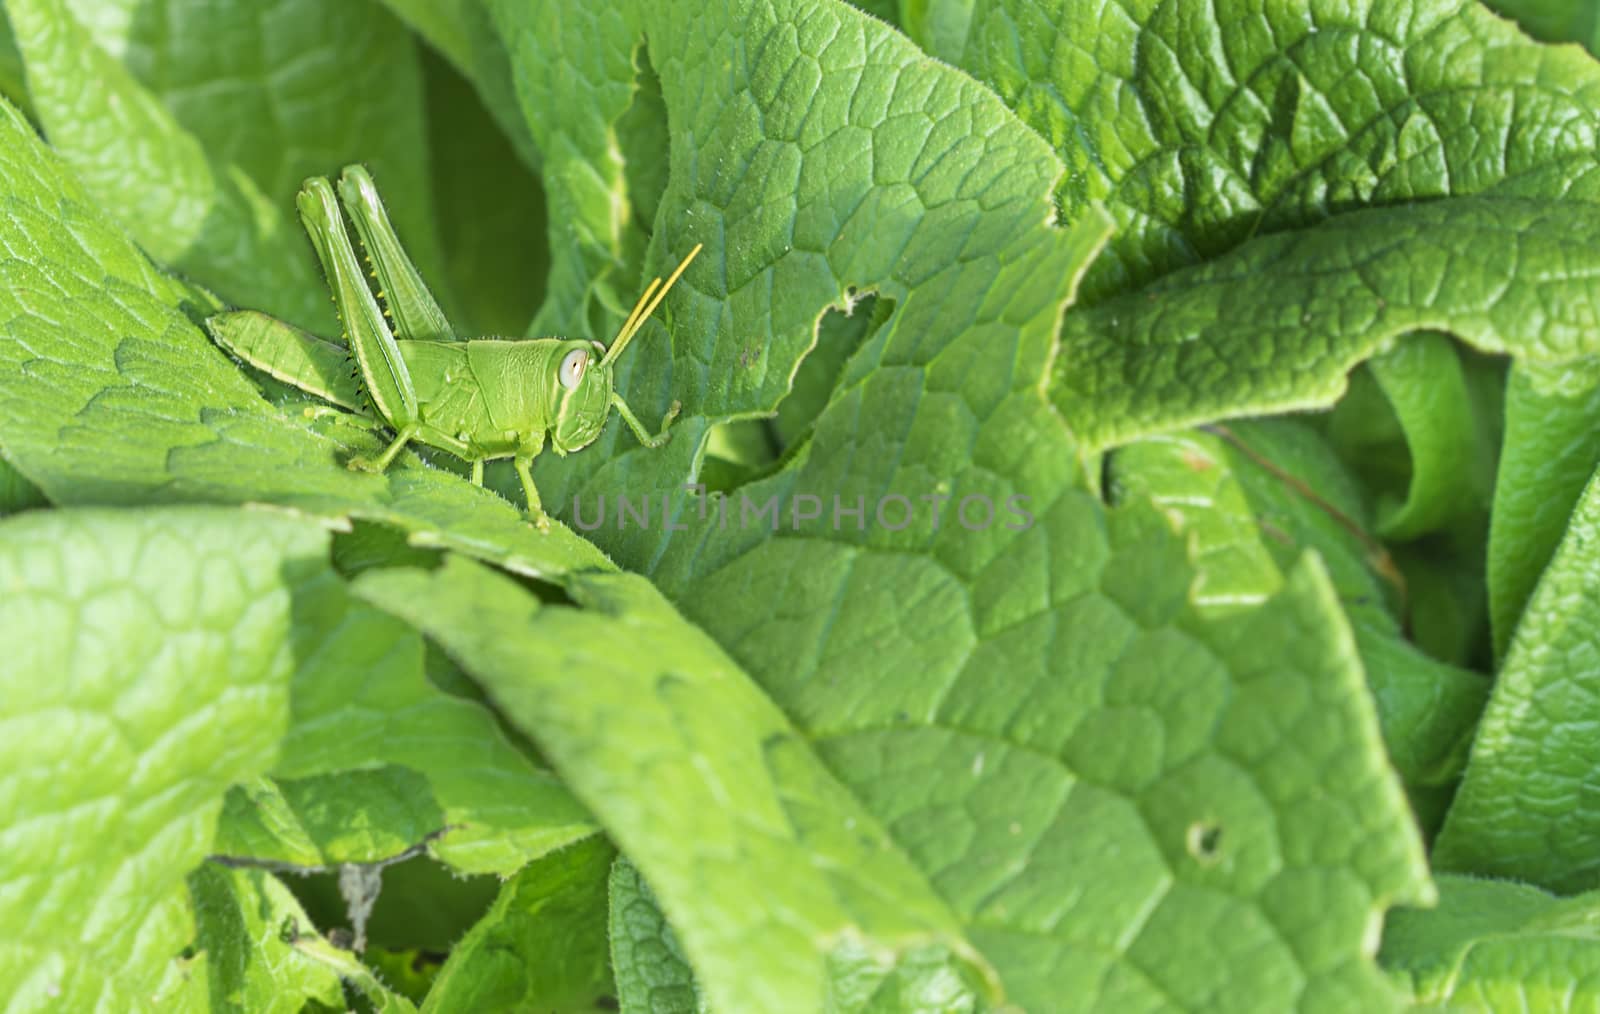 Green Grasshopper, a garden pest, on Comphrey Leaves in natural garden environment